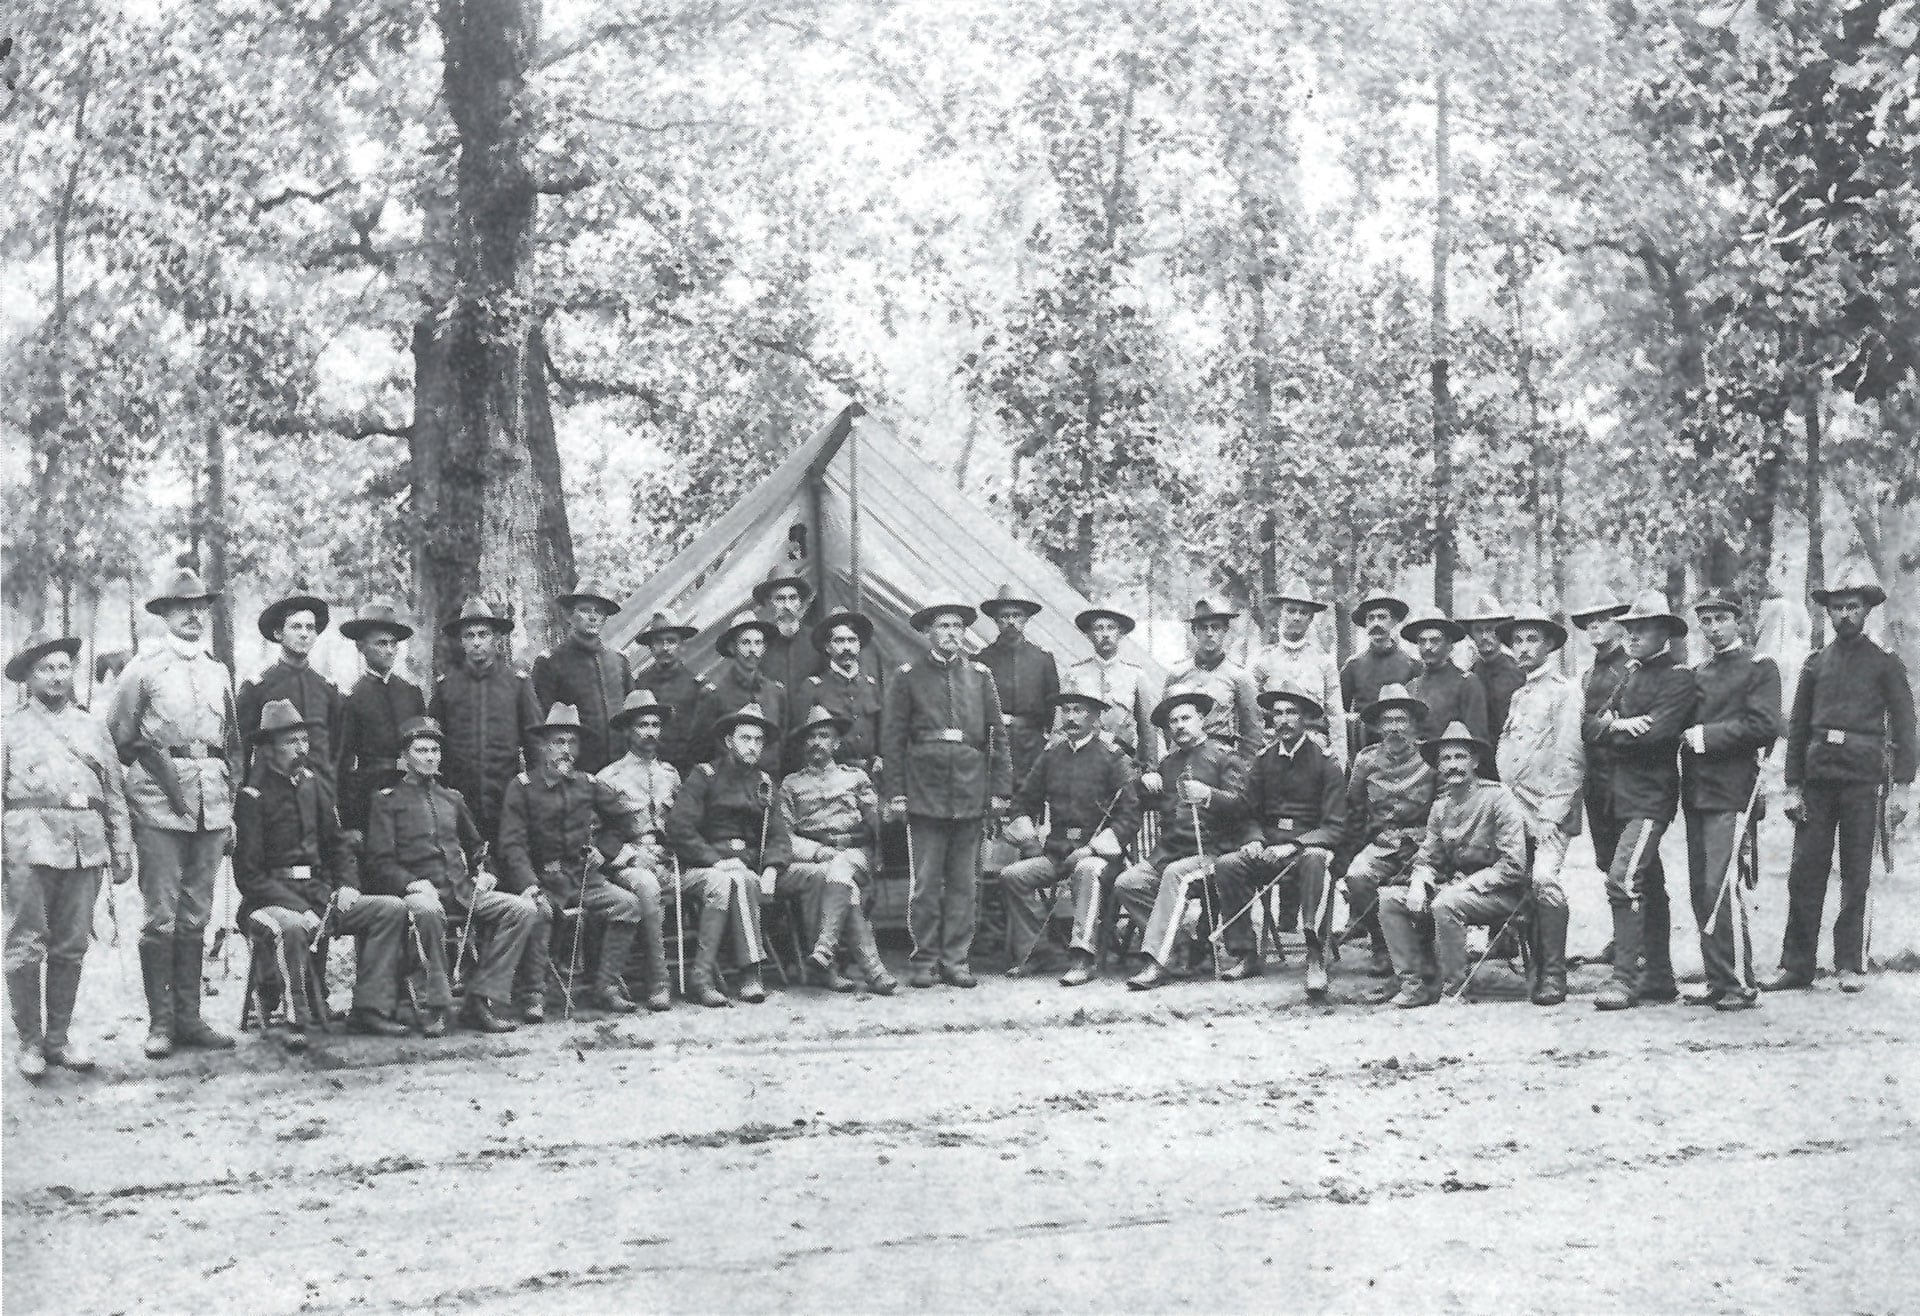 1898 – Company F, 2nd Arkansas Volunteers